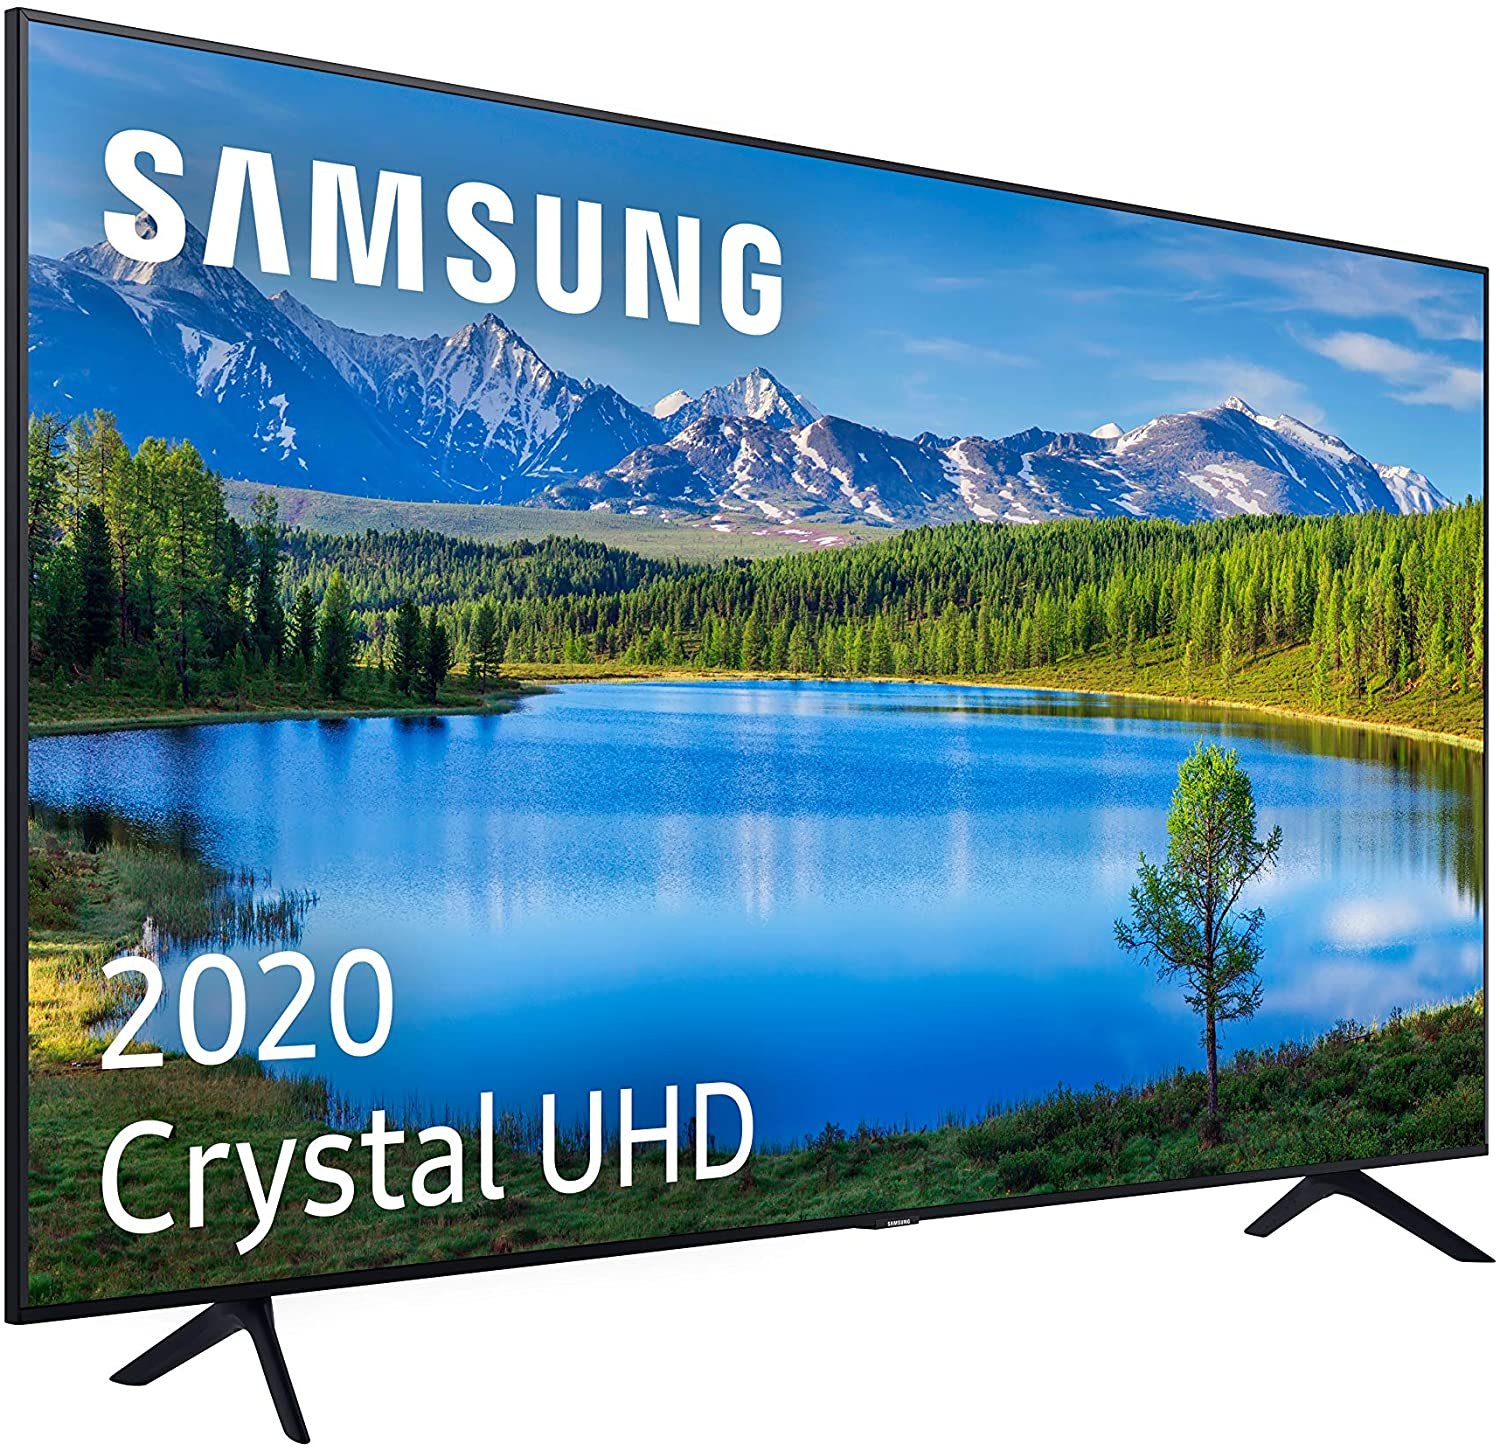 Samsung Crystal UHD 2020 43TU7095 43 PULG 4K mejor televisor